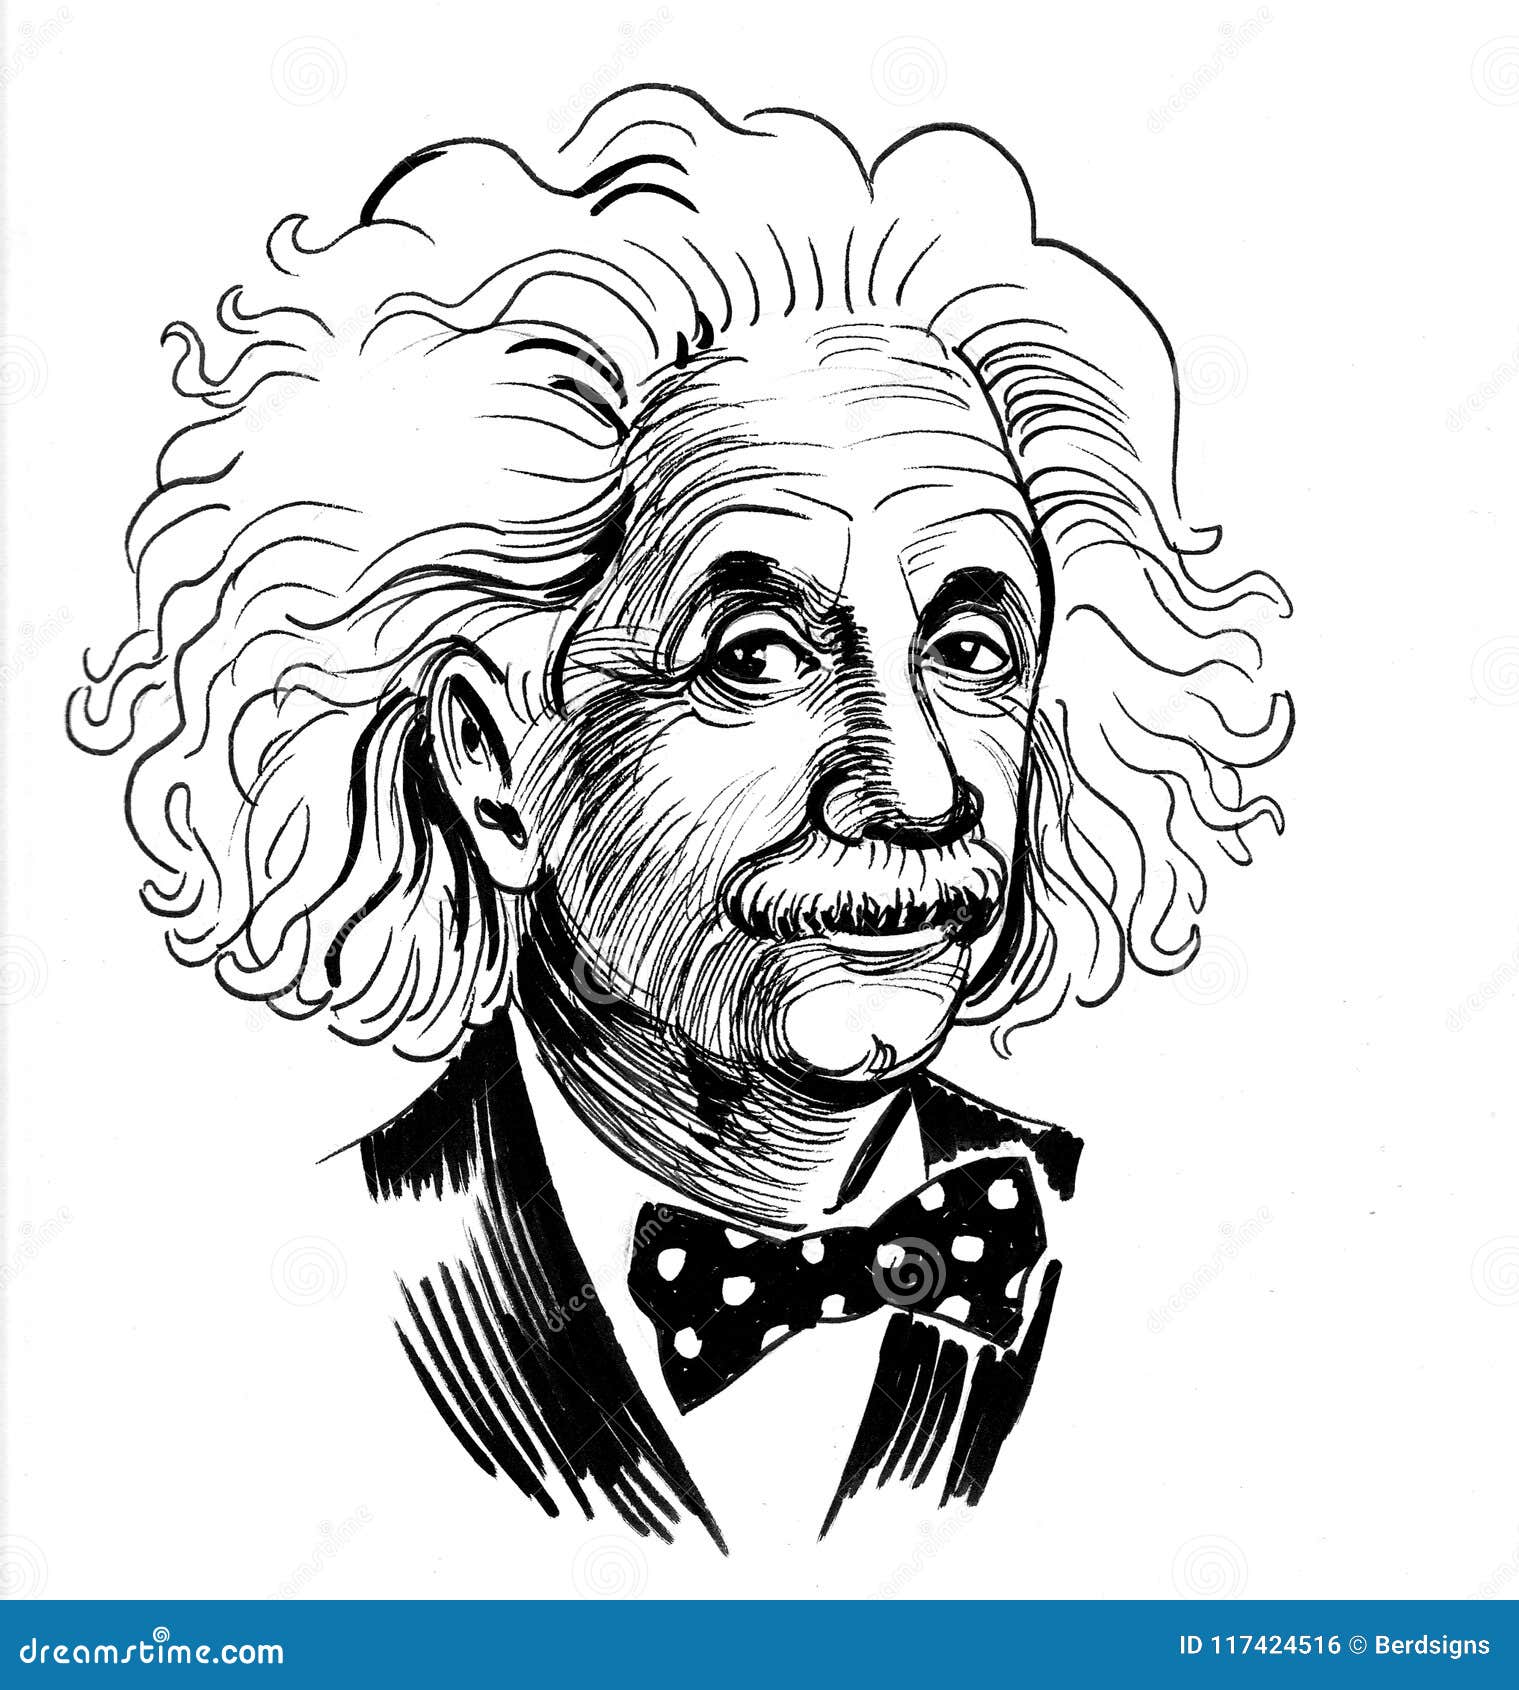 Albert Einstein Stock Illustration. Illustration Of Scientist - 117424516